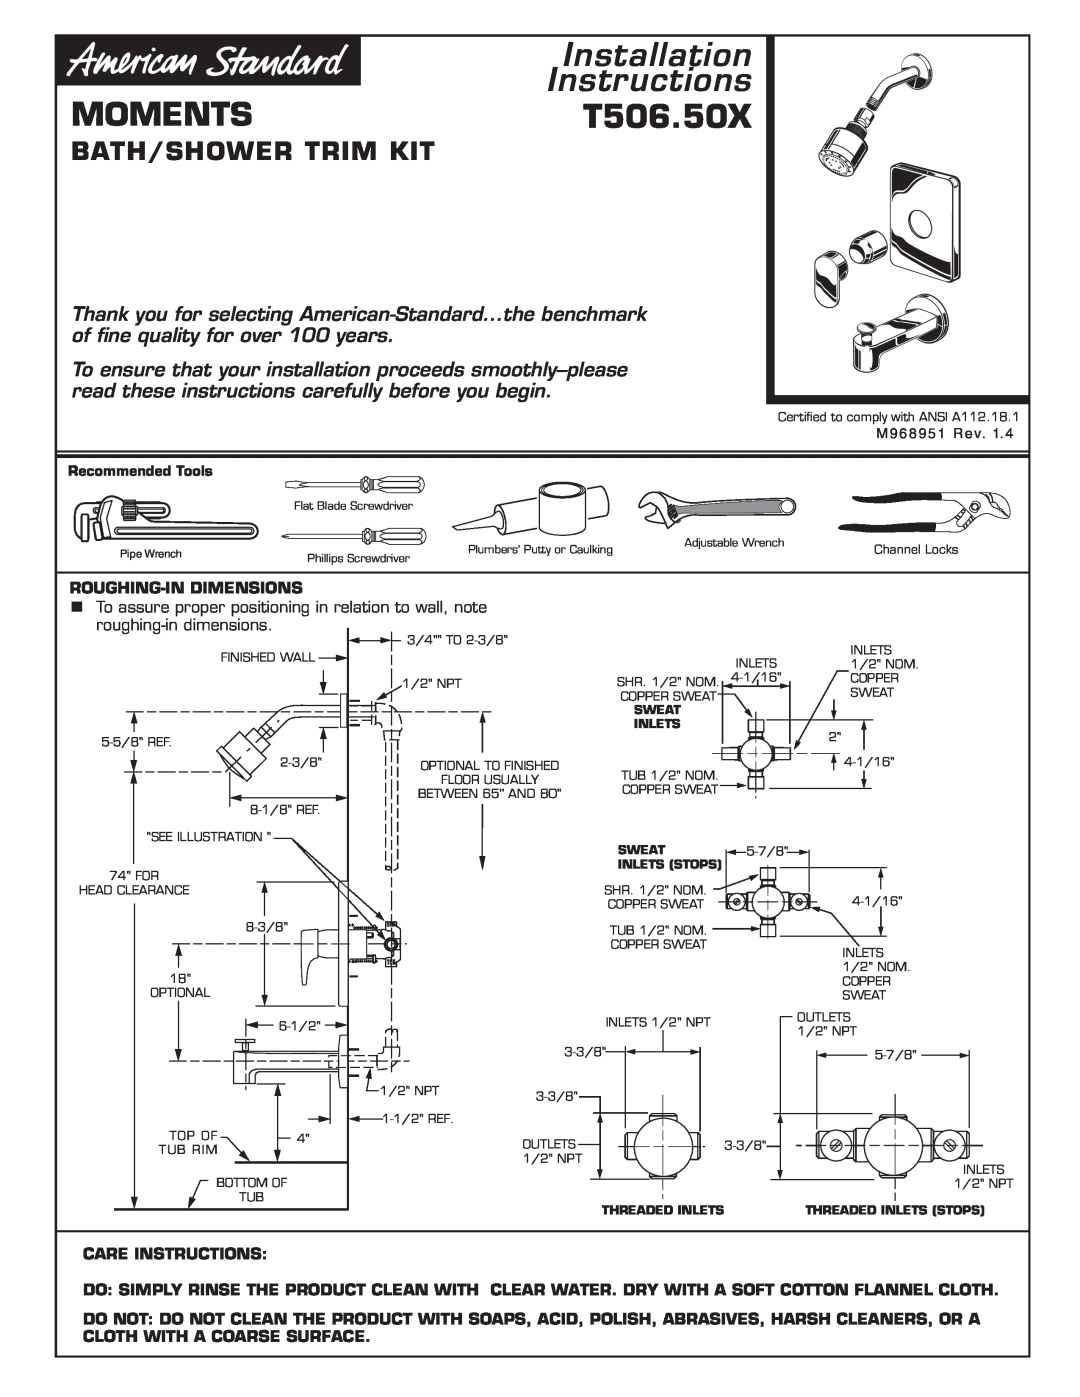 American Standard installation instructions Installation Instructions, MOMENTST506.50X, Bath/Shower Trim Kit 